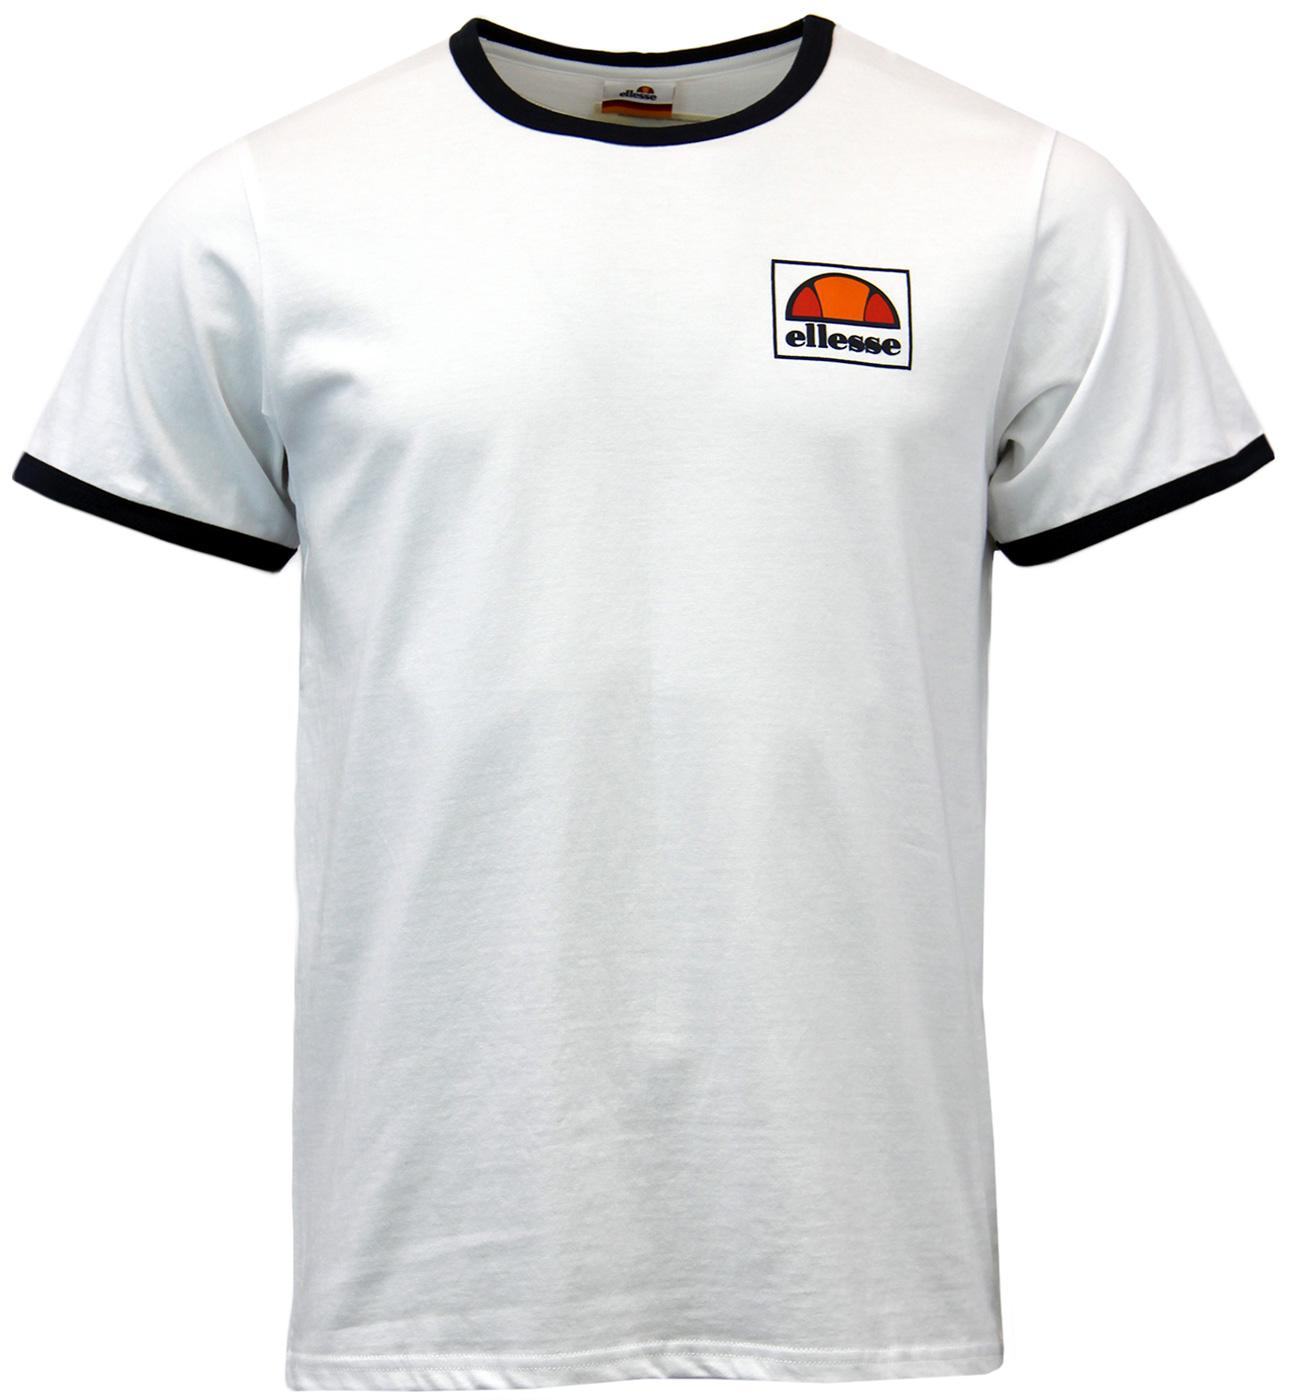 Montefello ELLESSE Retro 80s Tipped Jersey T-Shirt